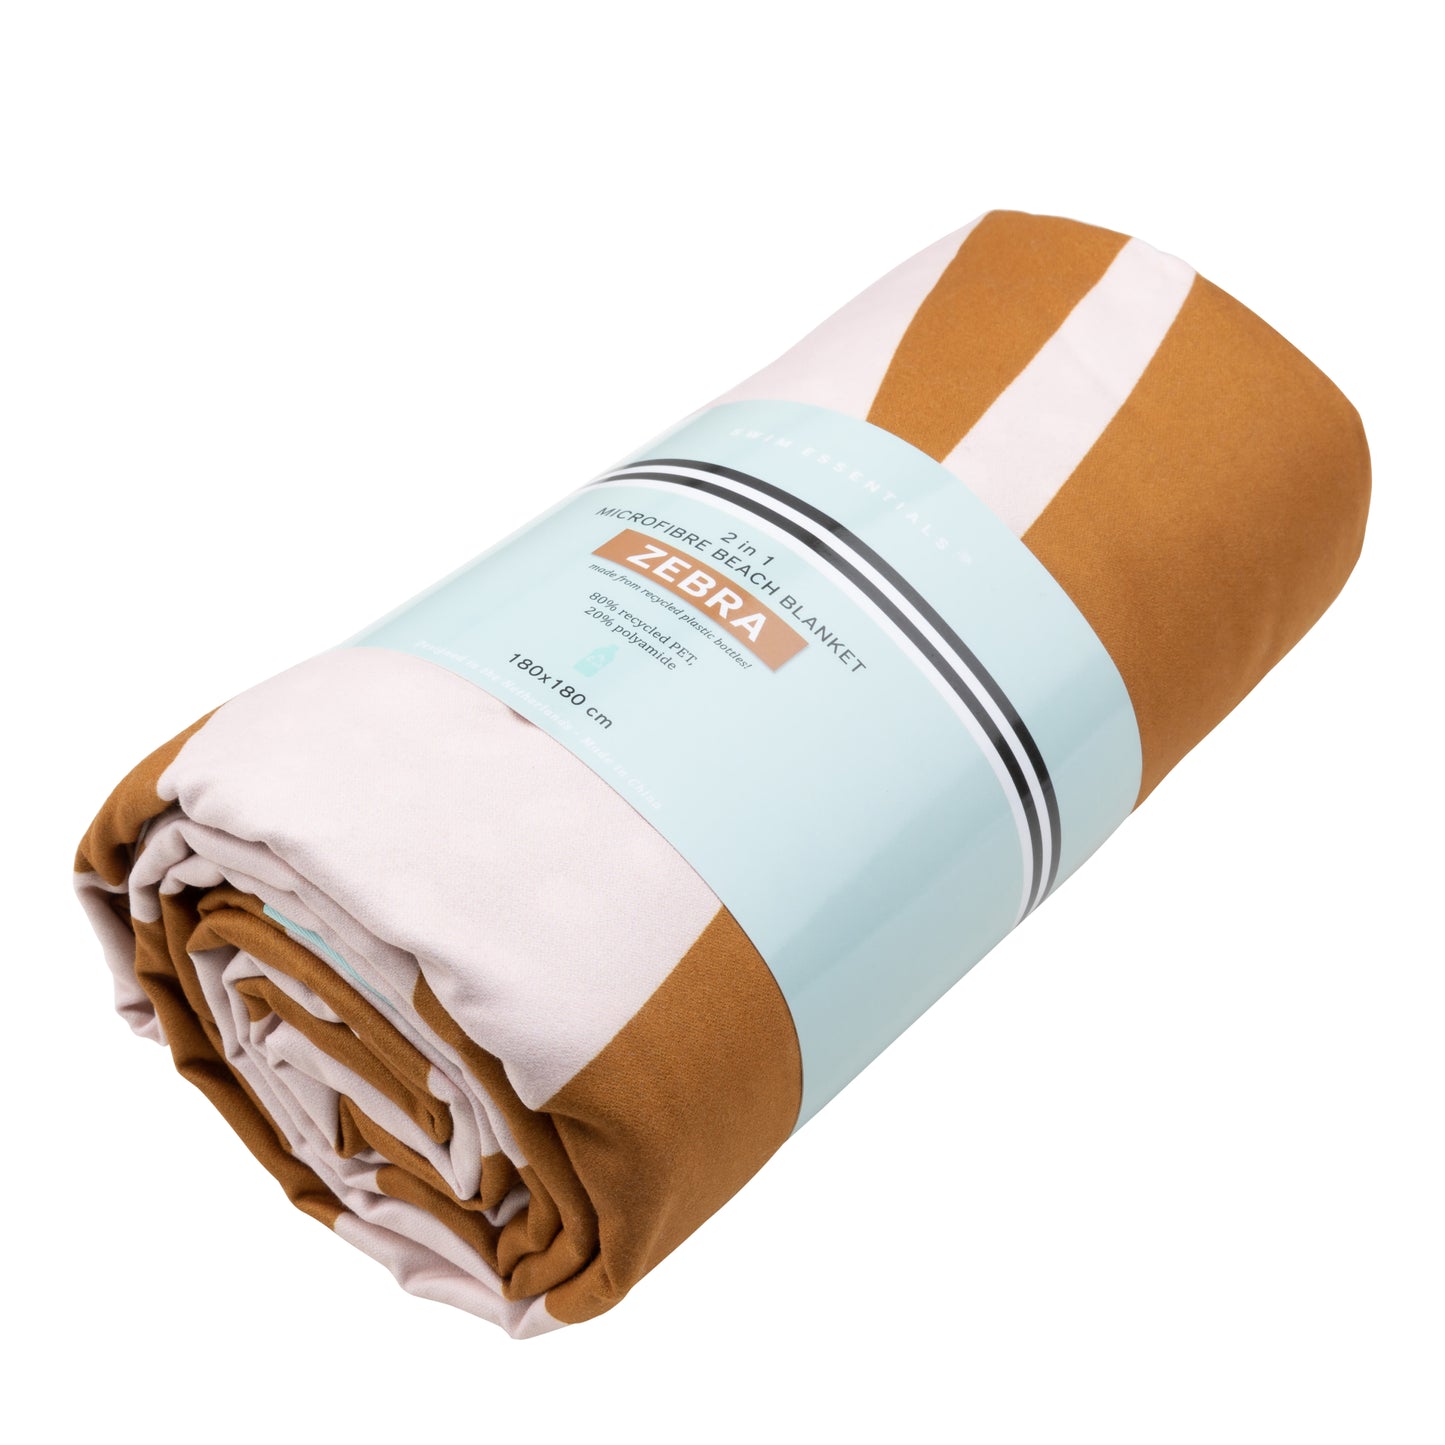 SE Microfiber Towel XXL Orange Zebra 180 x 180 cm